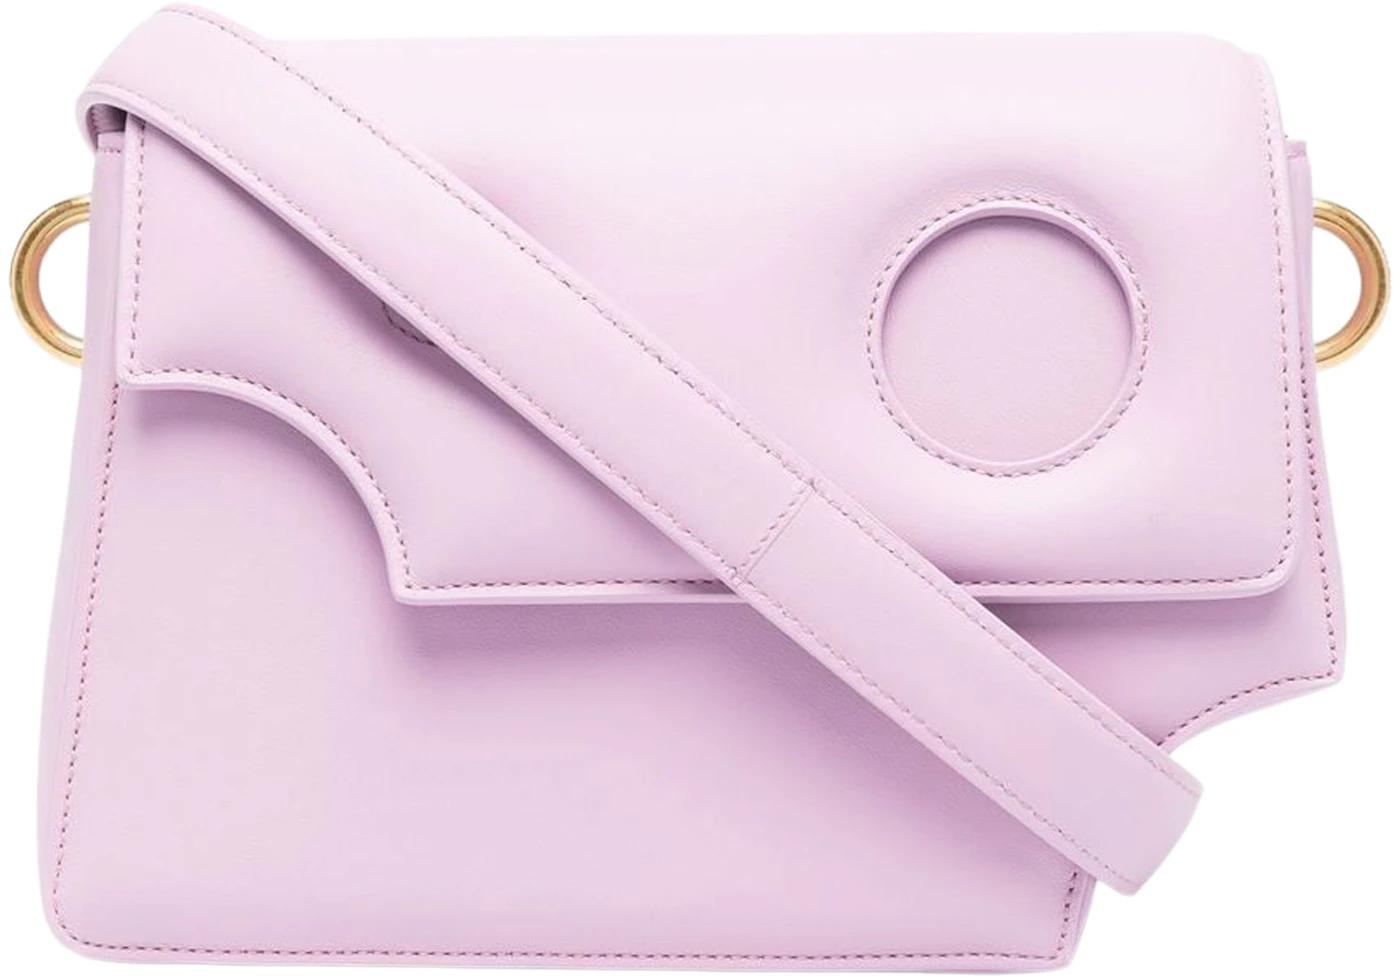 Off-White Burrow-22 Leather Shoulder Bag - Pink